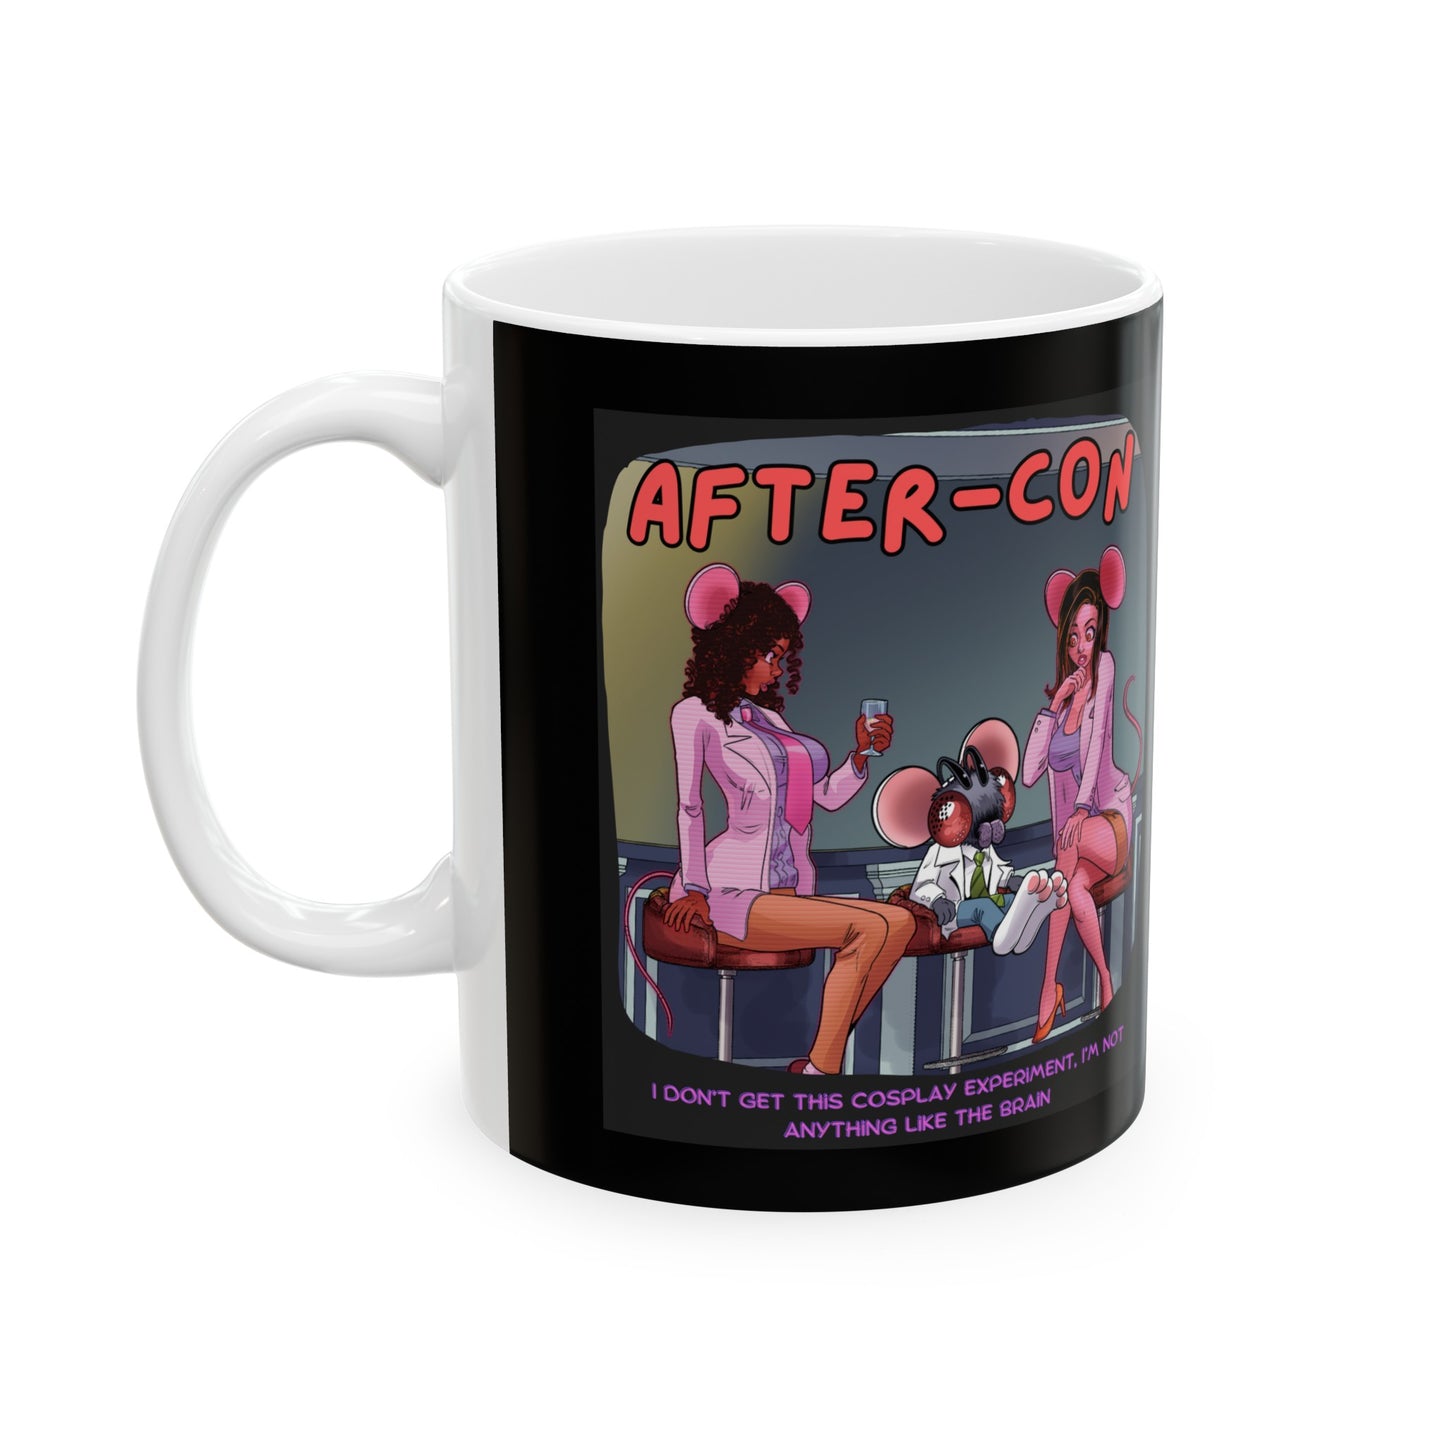 After-Con "Like the Brain" Ceramic Mug